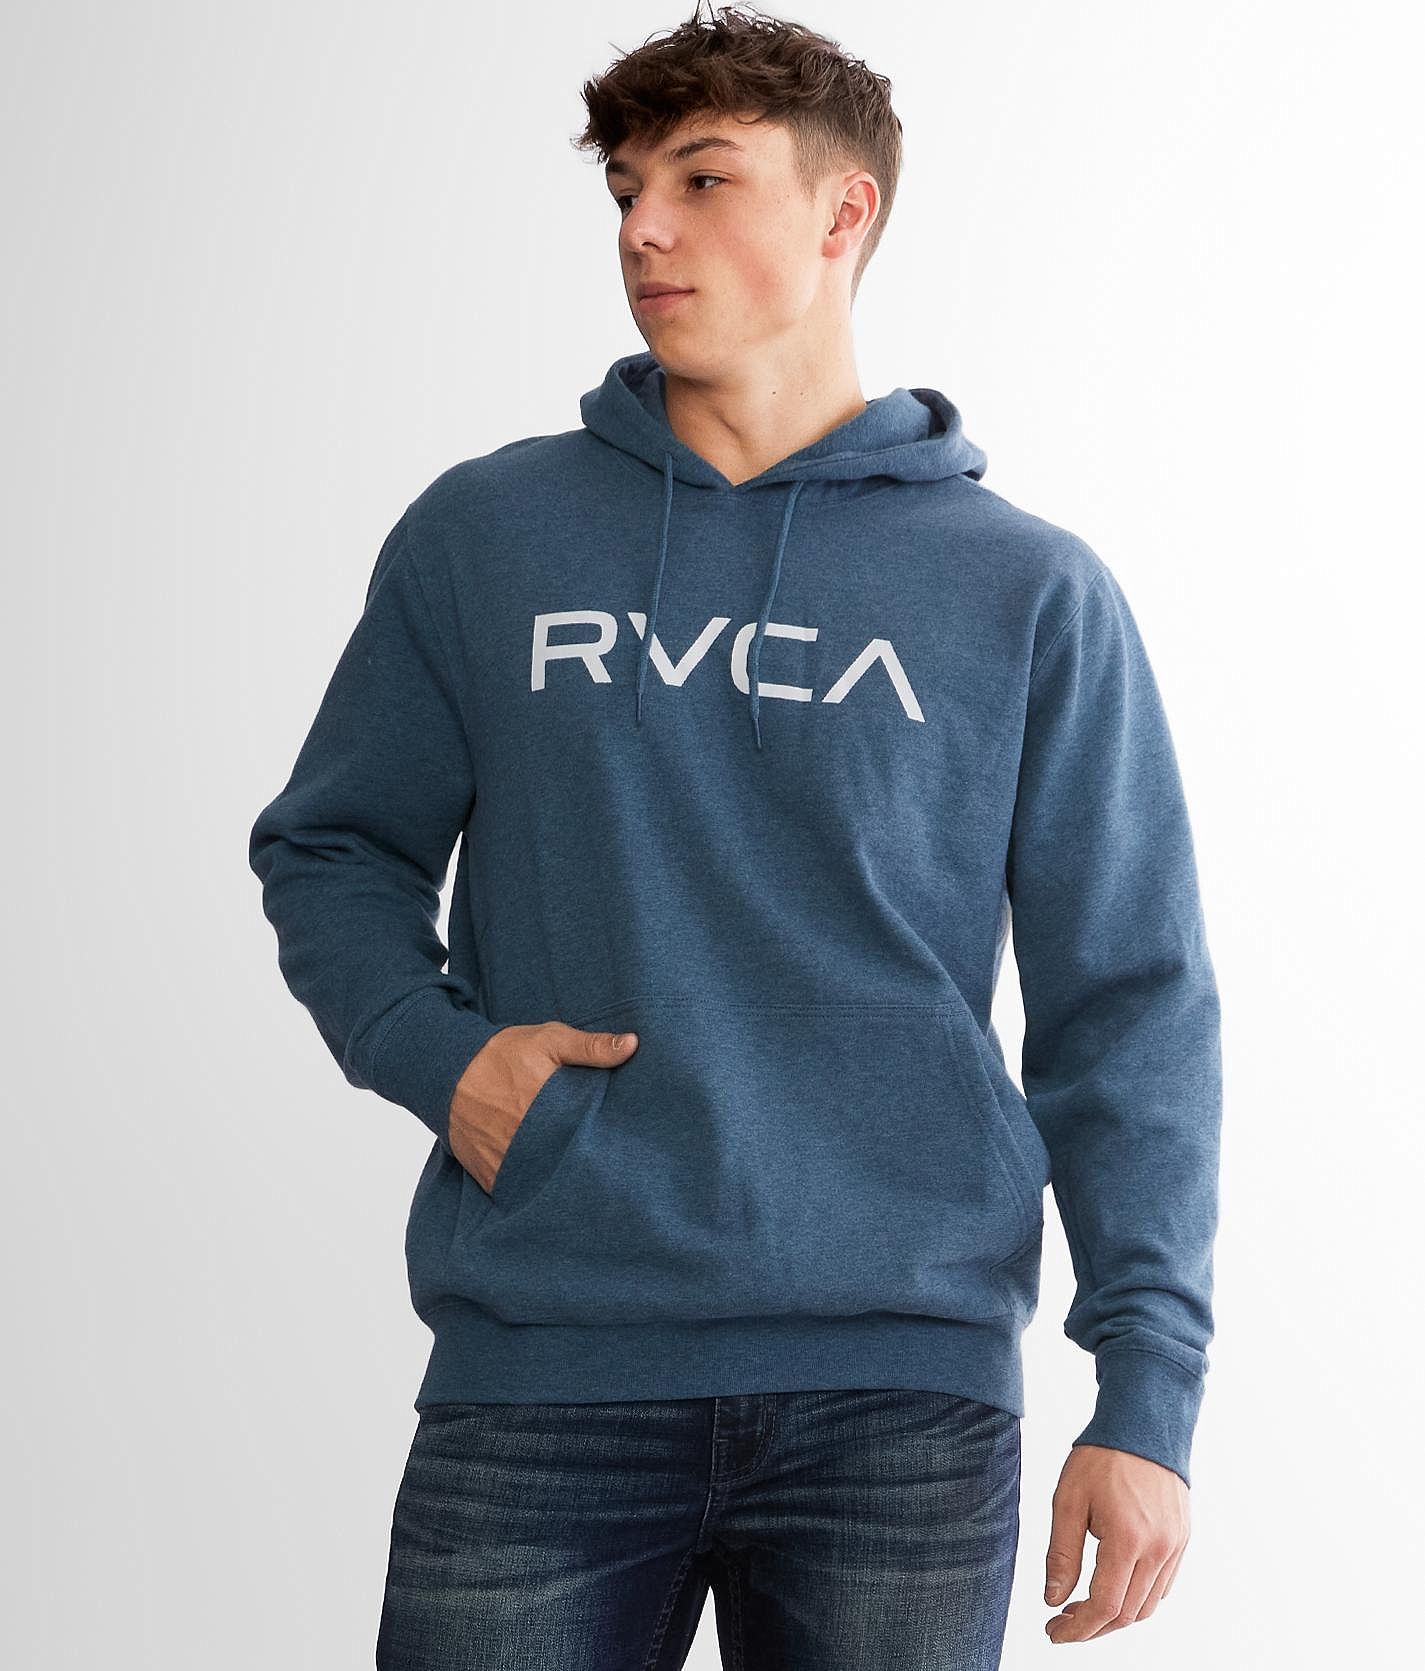 RVCA Big Hooded Sweatshirt - Men's Sweatshirts in Majolica Blue 